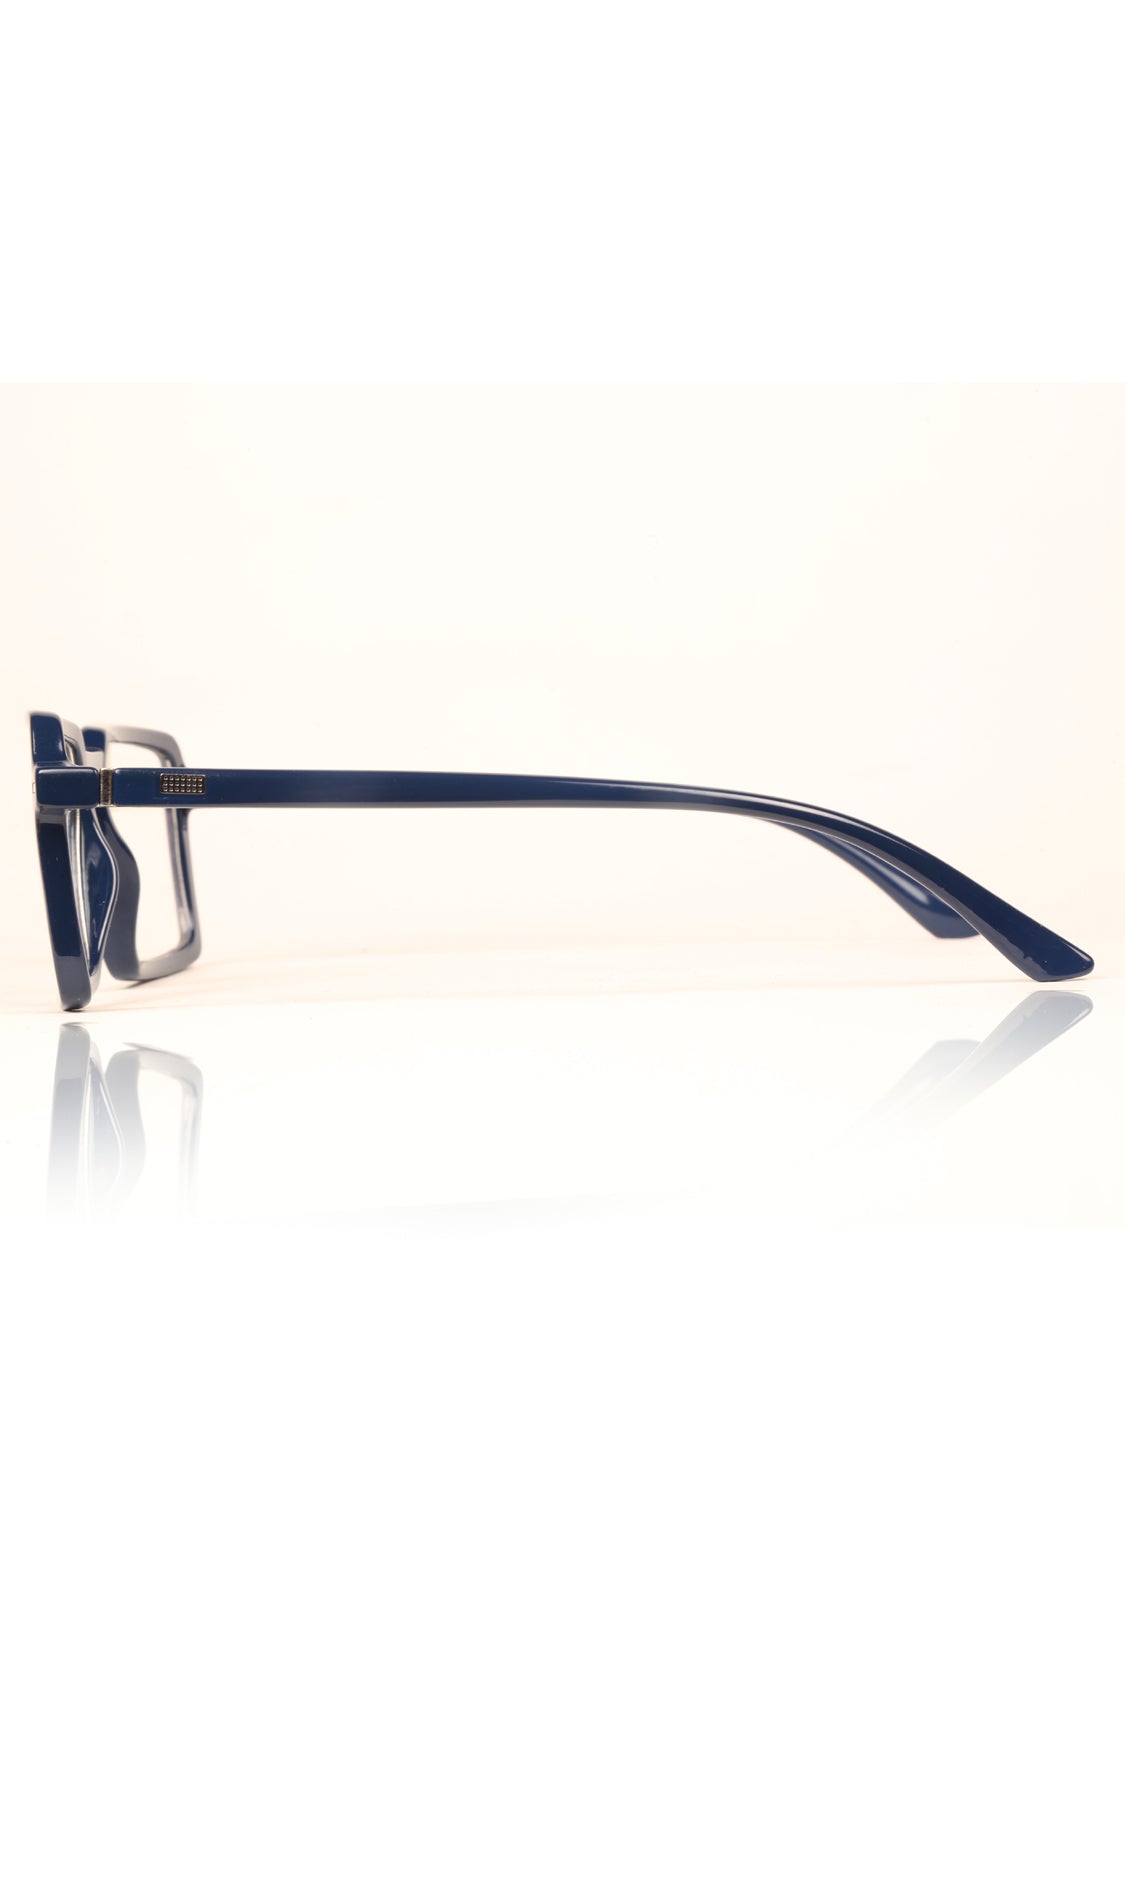 Jodykoes® Colour Frame Series Eyewears | Blue Rays Protection Square Stylish Spectacles With Anti Glare Eyeglasses For Men and Women Eyewears (Navy Blue) - Jodykoes ®